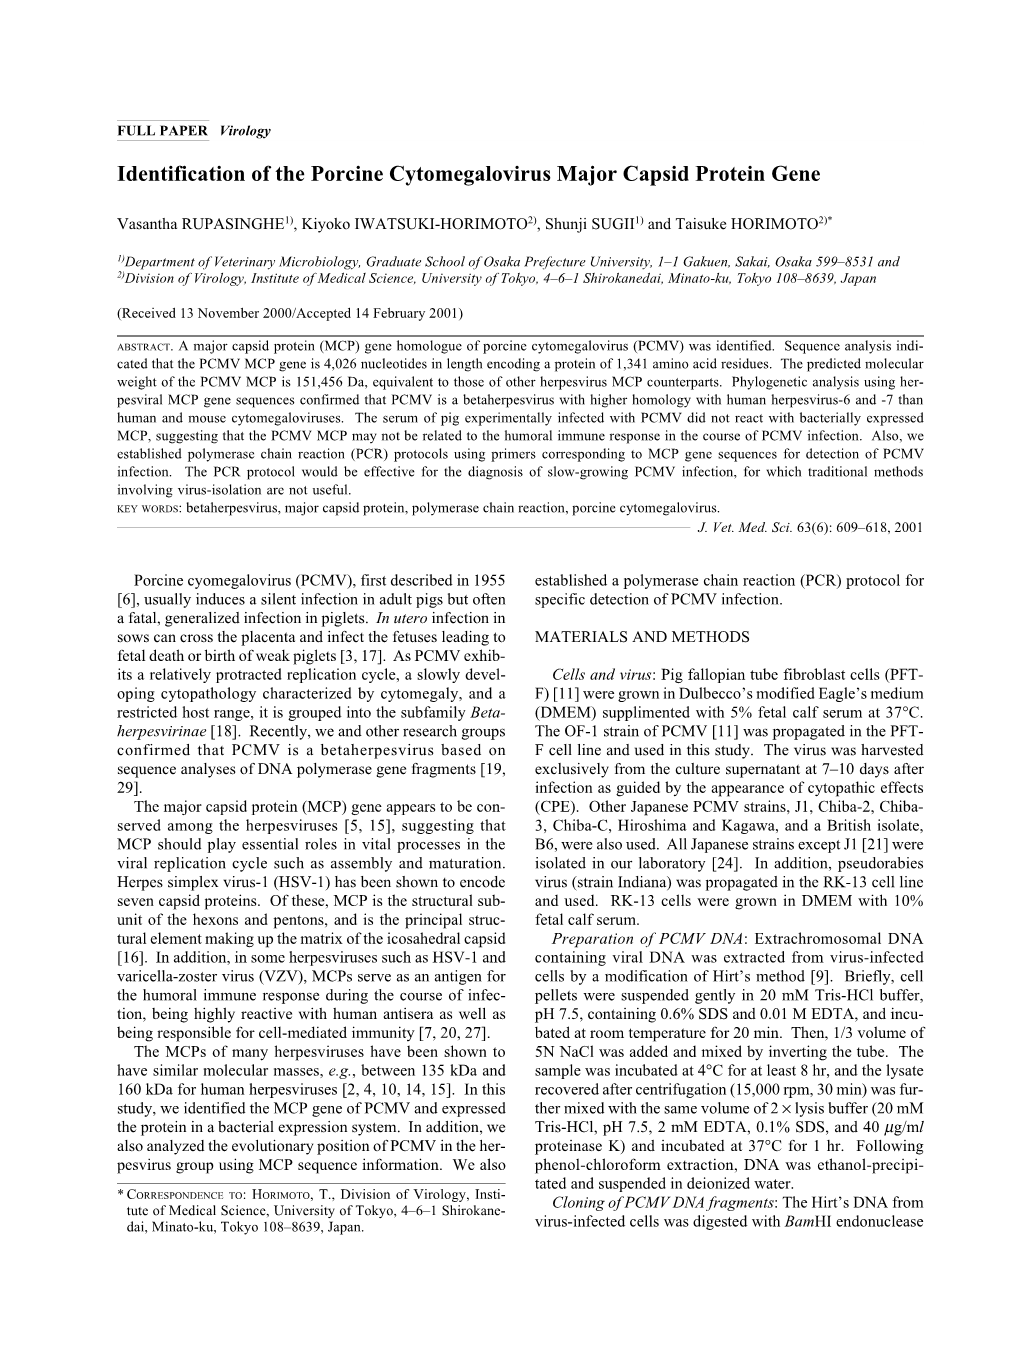 Identification of the Porcine Cytomegalovirus Major Capsid Protein Gene